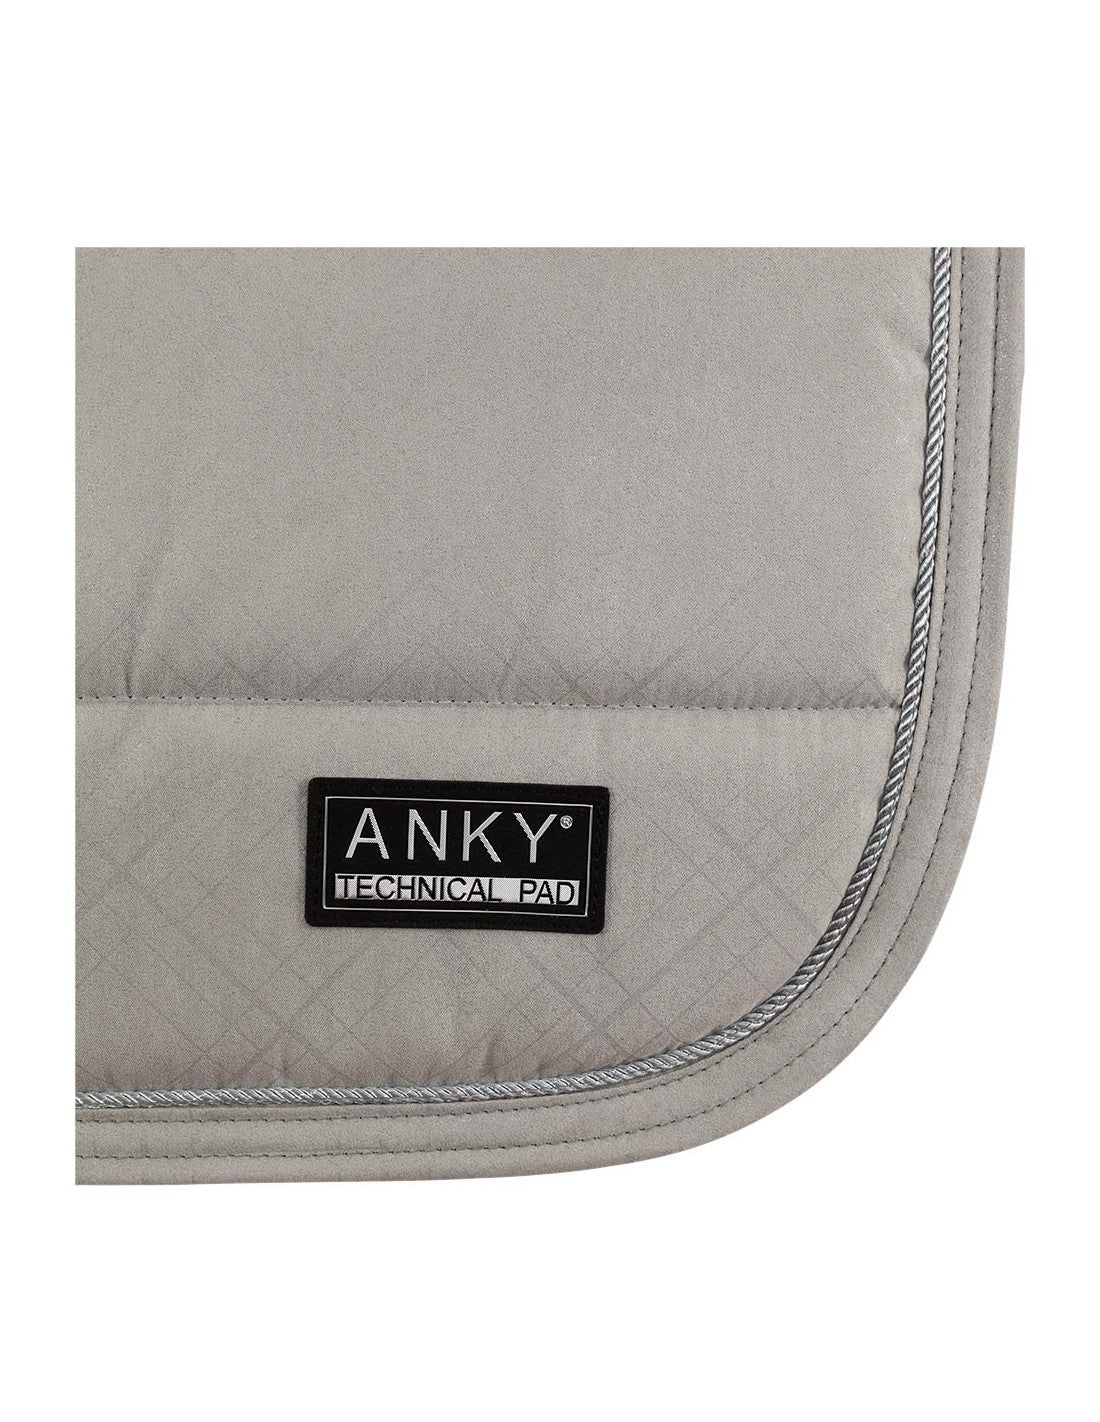 Anky Dressage Saddle Pad